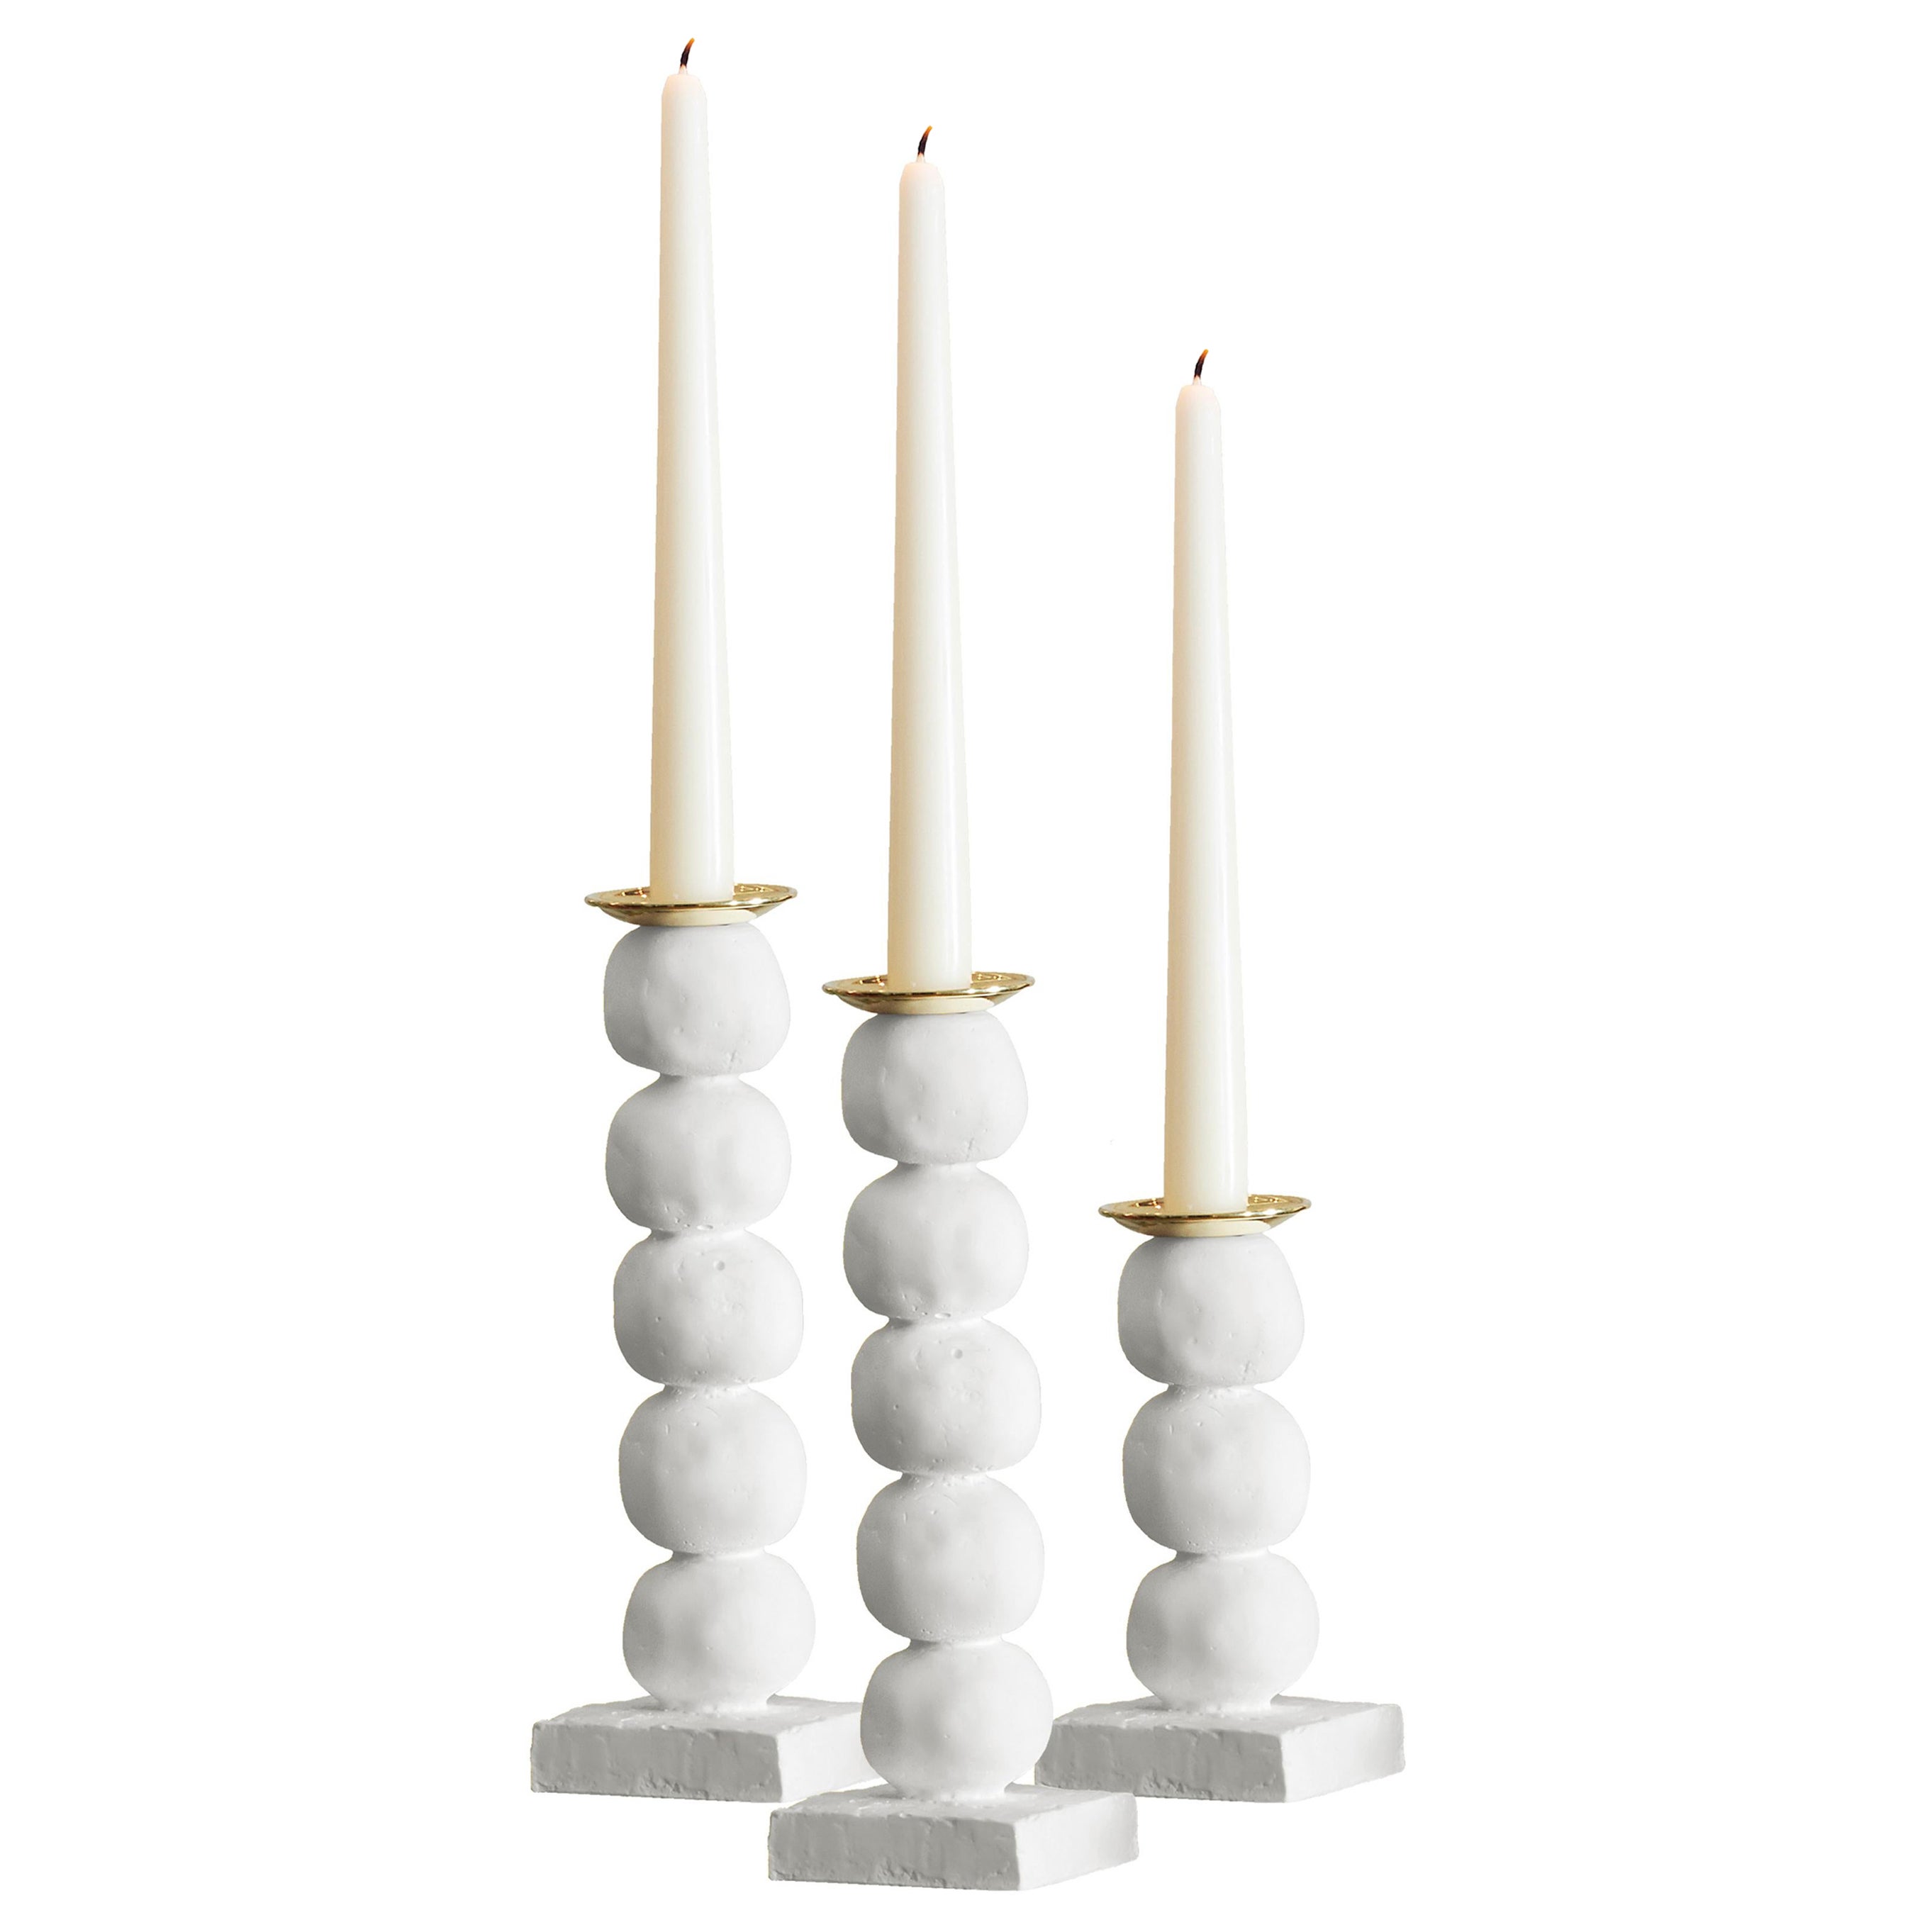 European Contemporary White Sculptural Candlestick Set of Three